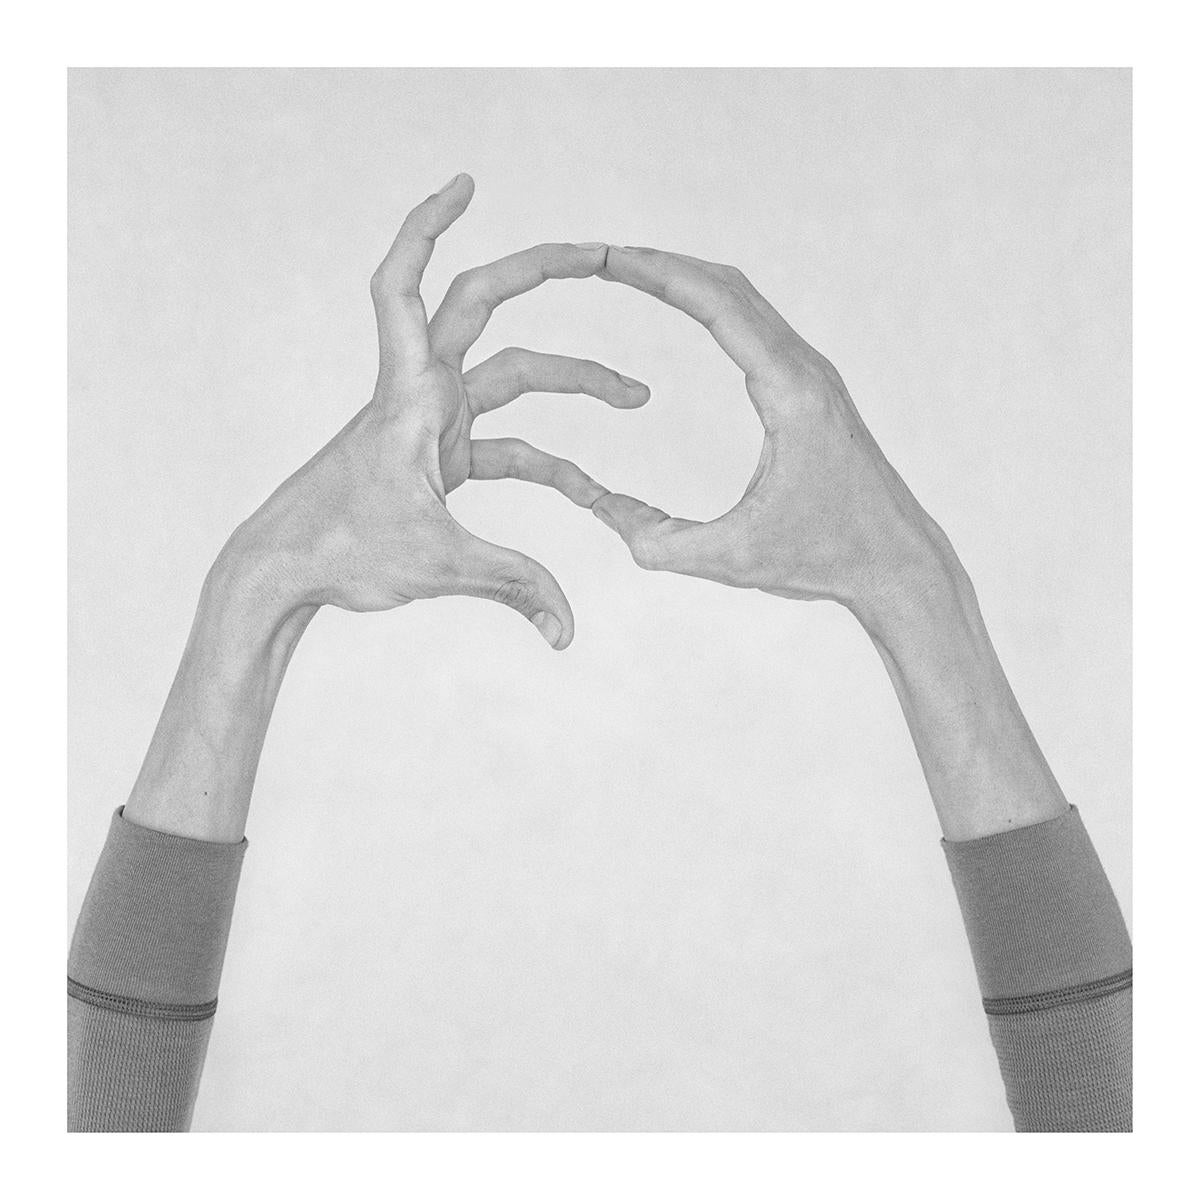 Nico Baixas / Gos-com-fuig Figurative Photograph - Untitled IX. From the Series Chiromorphose. Hands. Black & White Photography